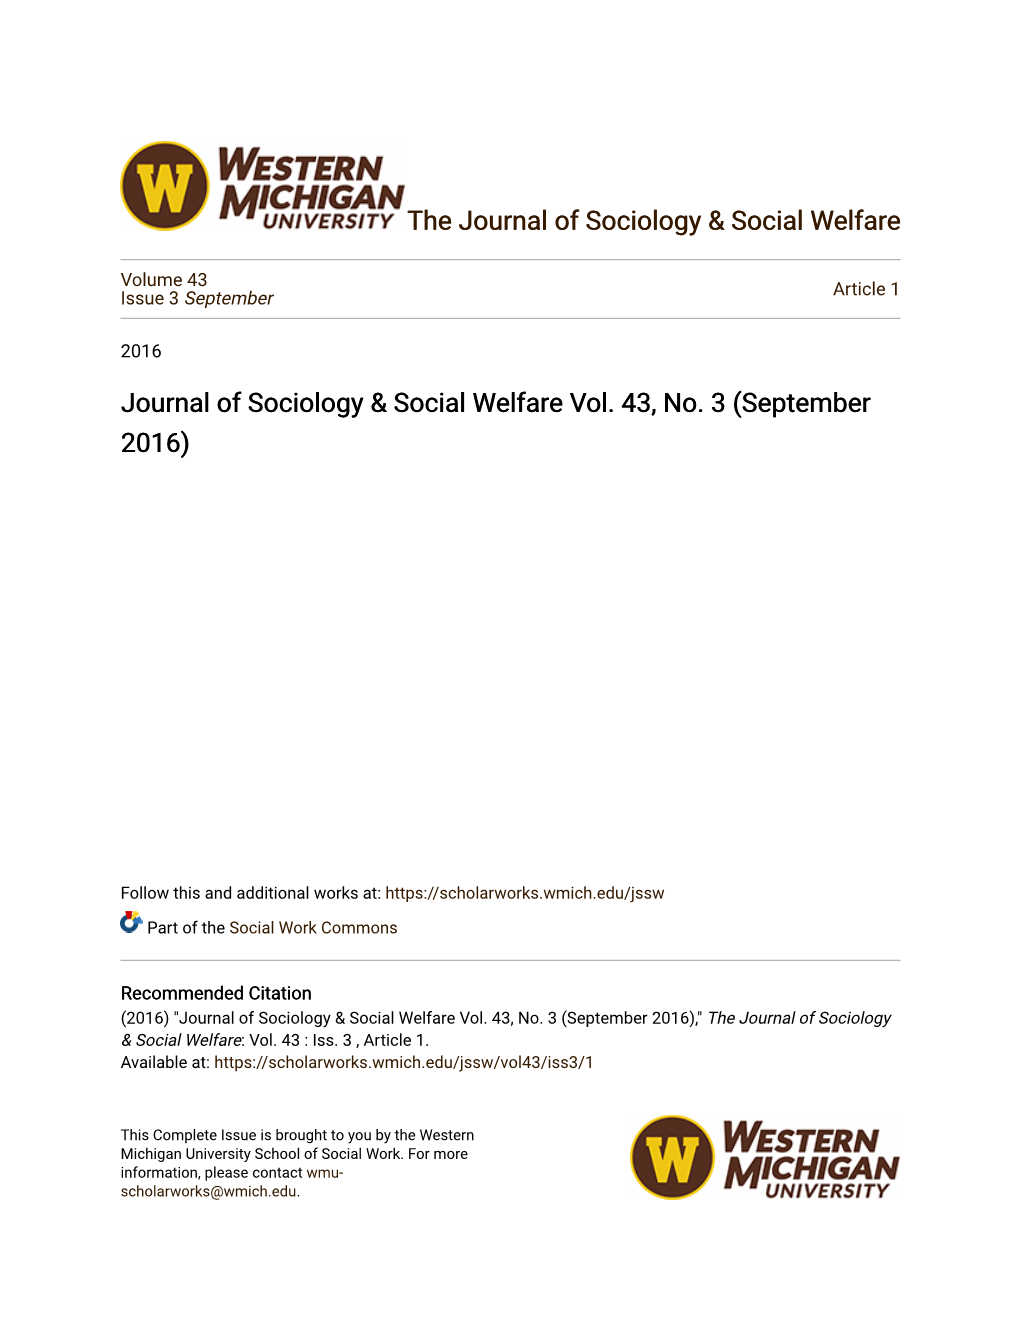 Journal of Sociology & Social Welfare Vol. 43, No. 3